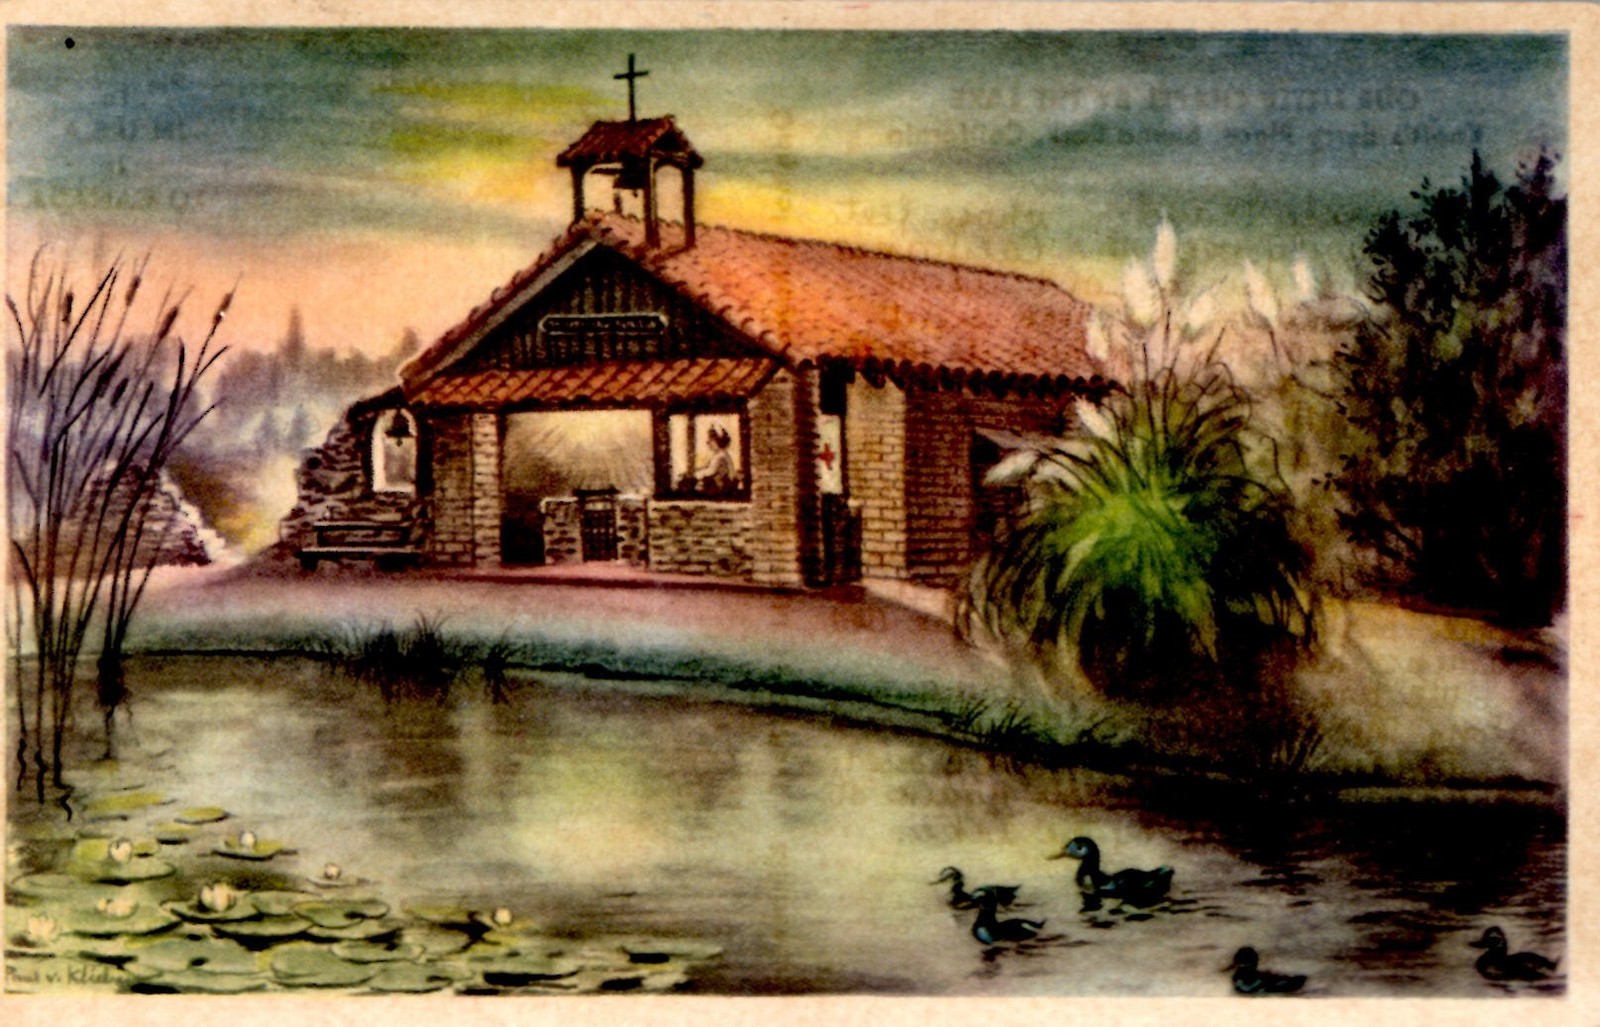 Our Little Chapel by the Lake, postcard, Knott's Berry Farm, circa 1944